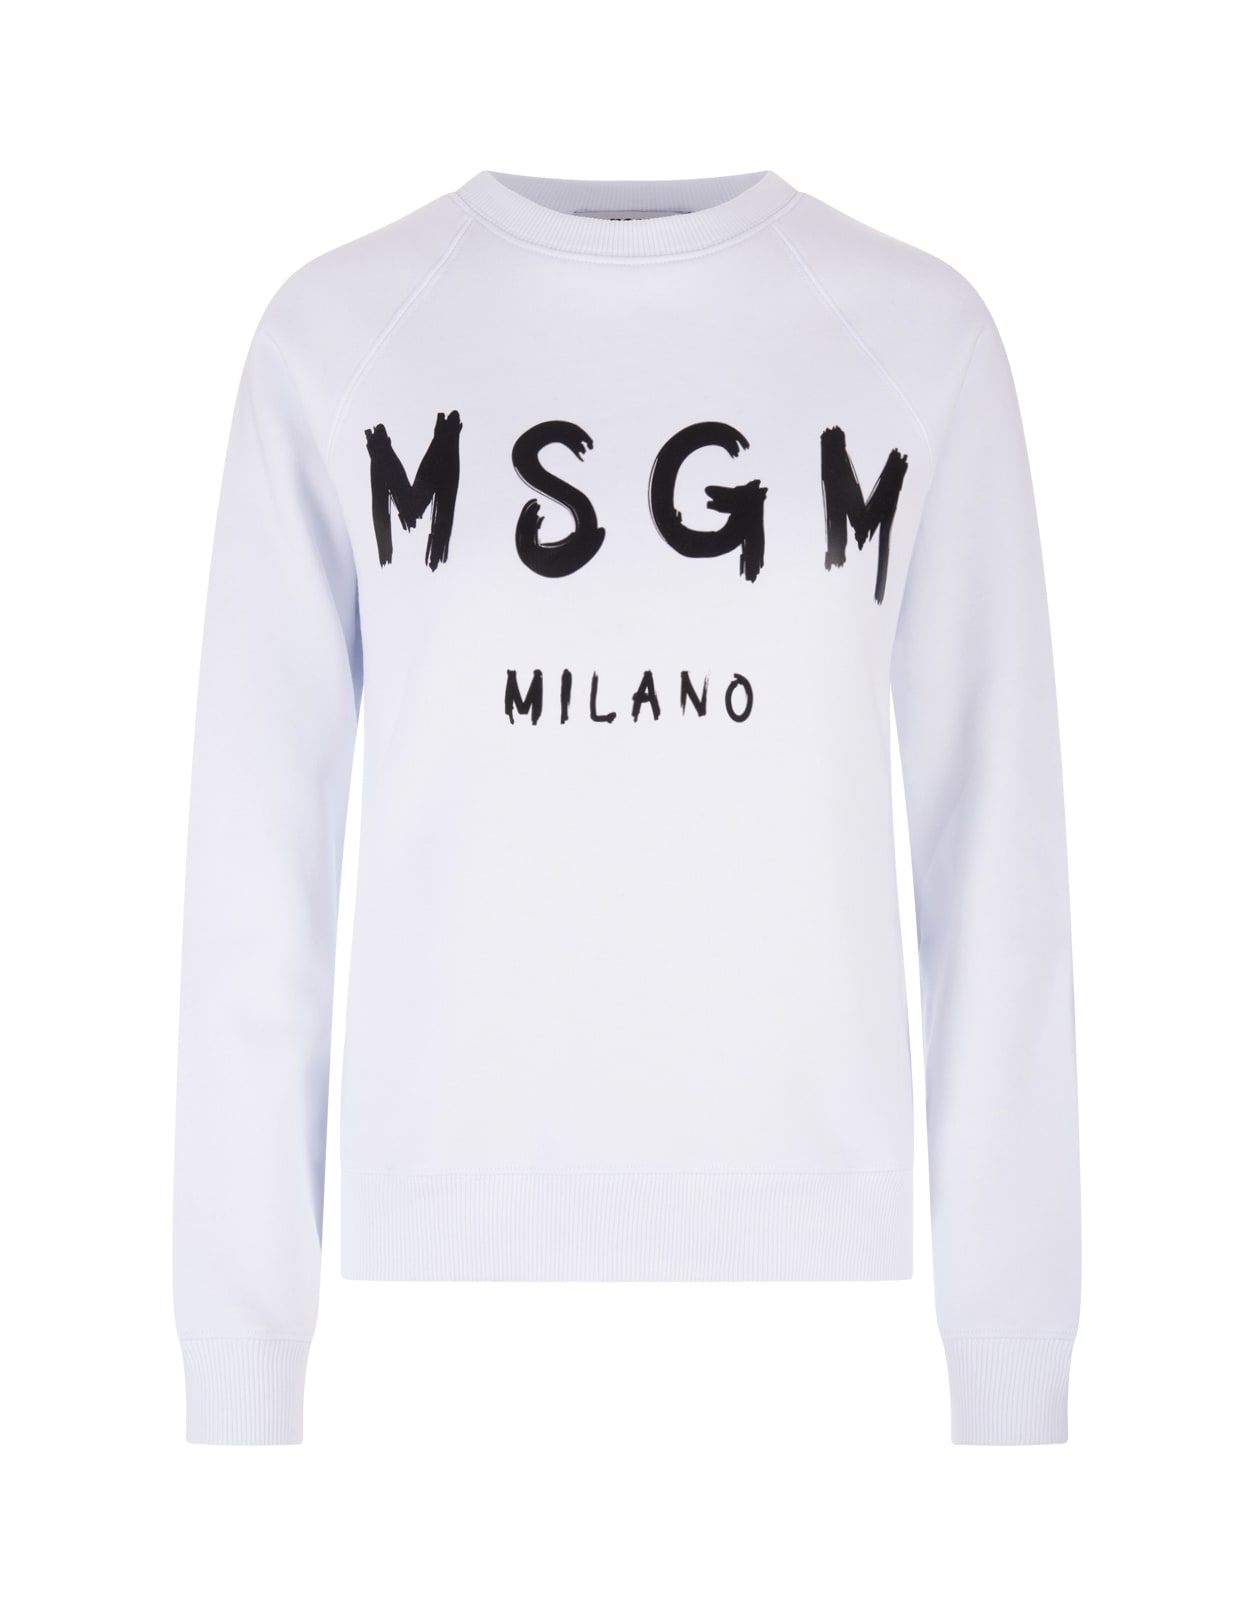 MSGM Woman White Sweatshirt With Black Brushed Logo